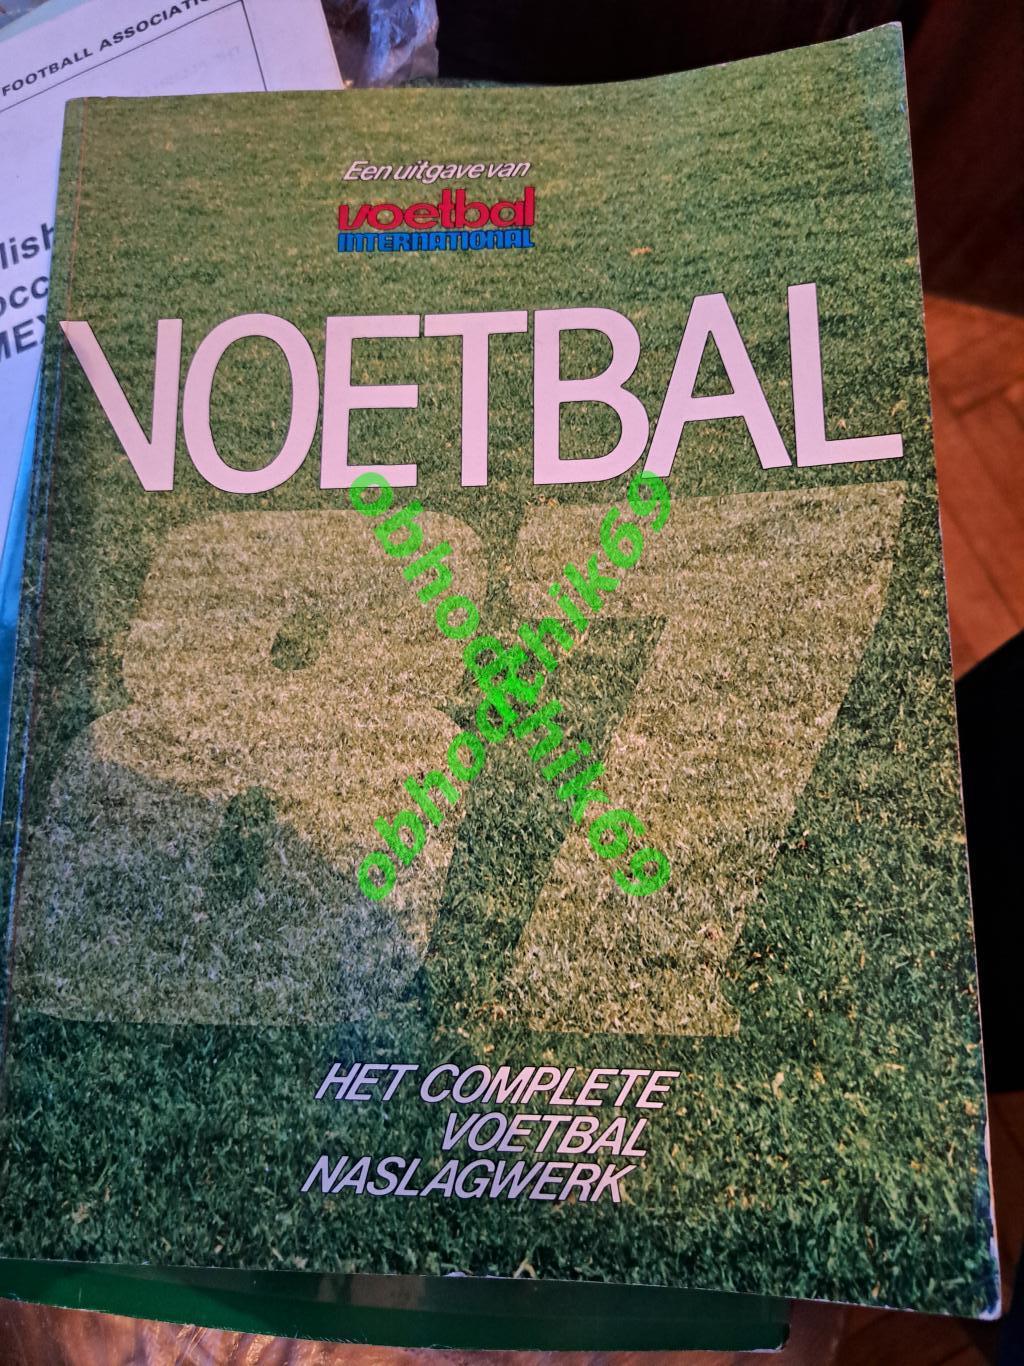 Футбол ежегодник Нидерланды Voetball 1987